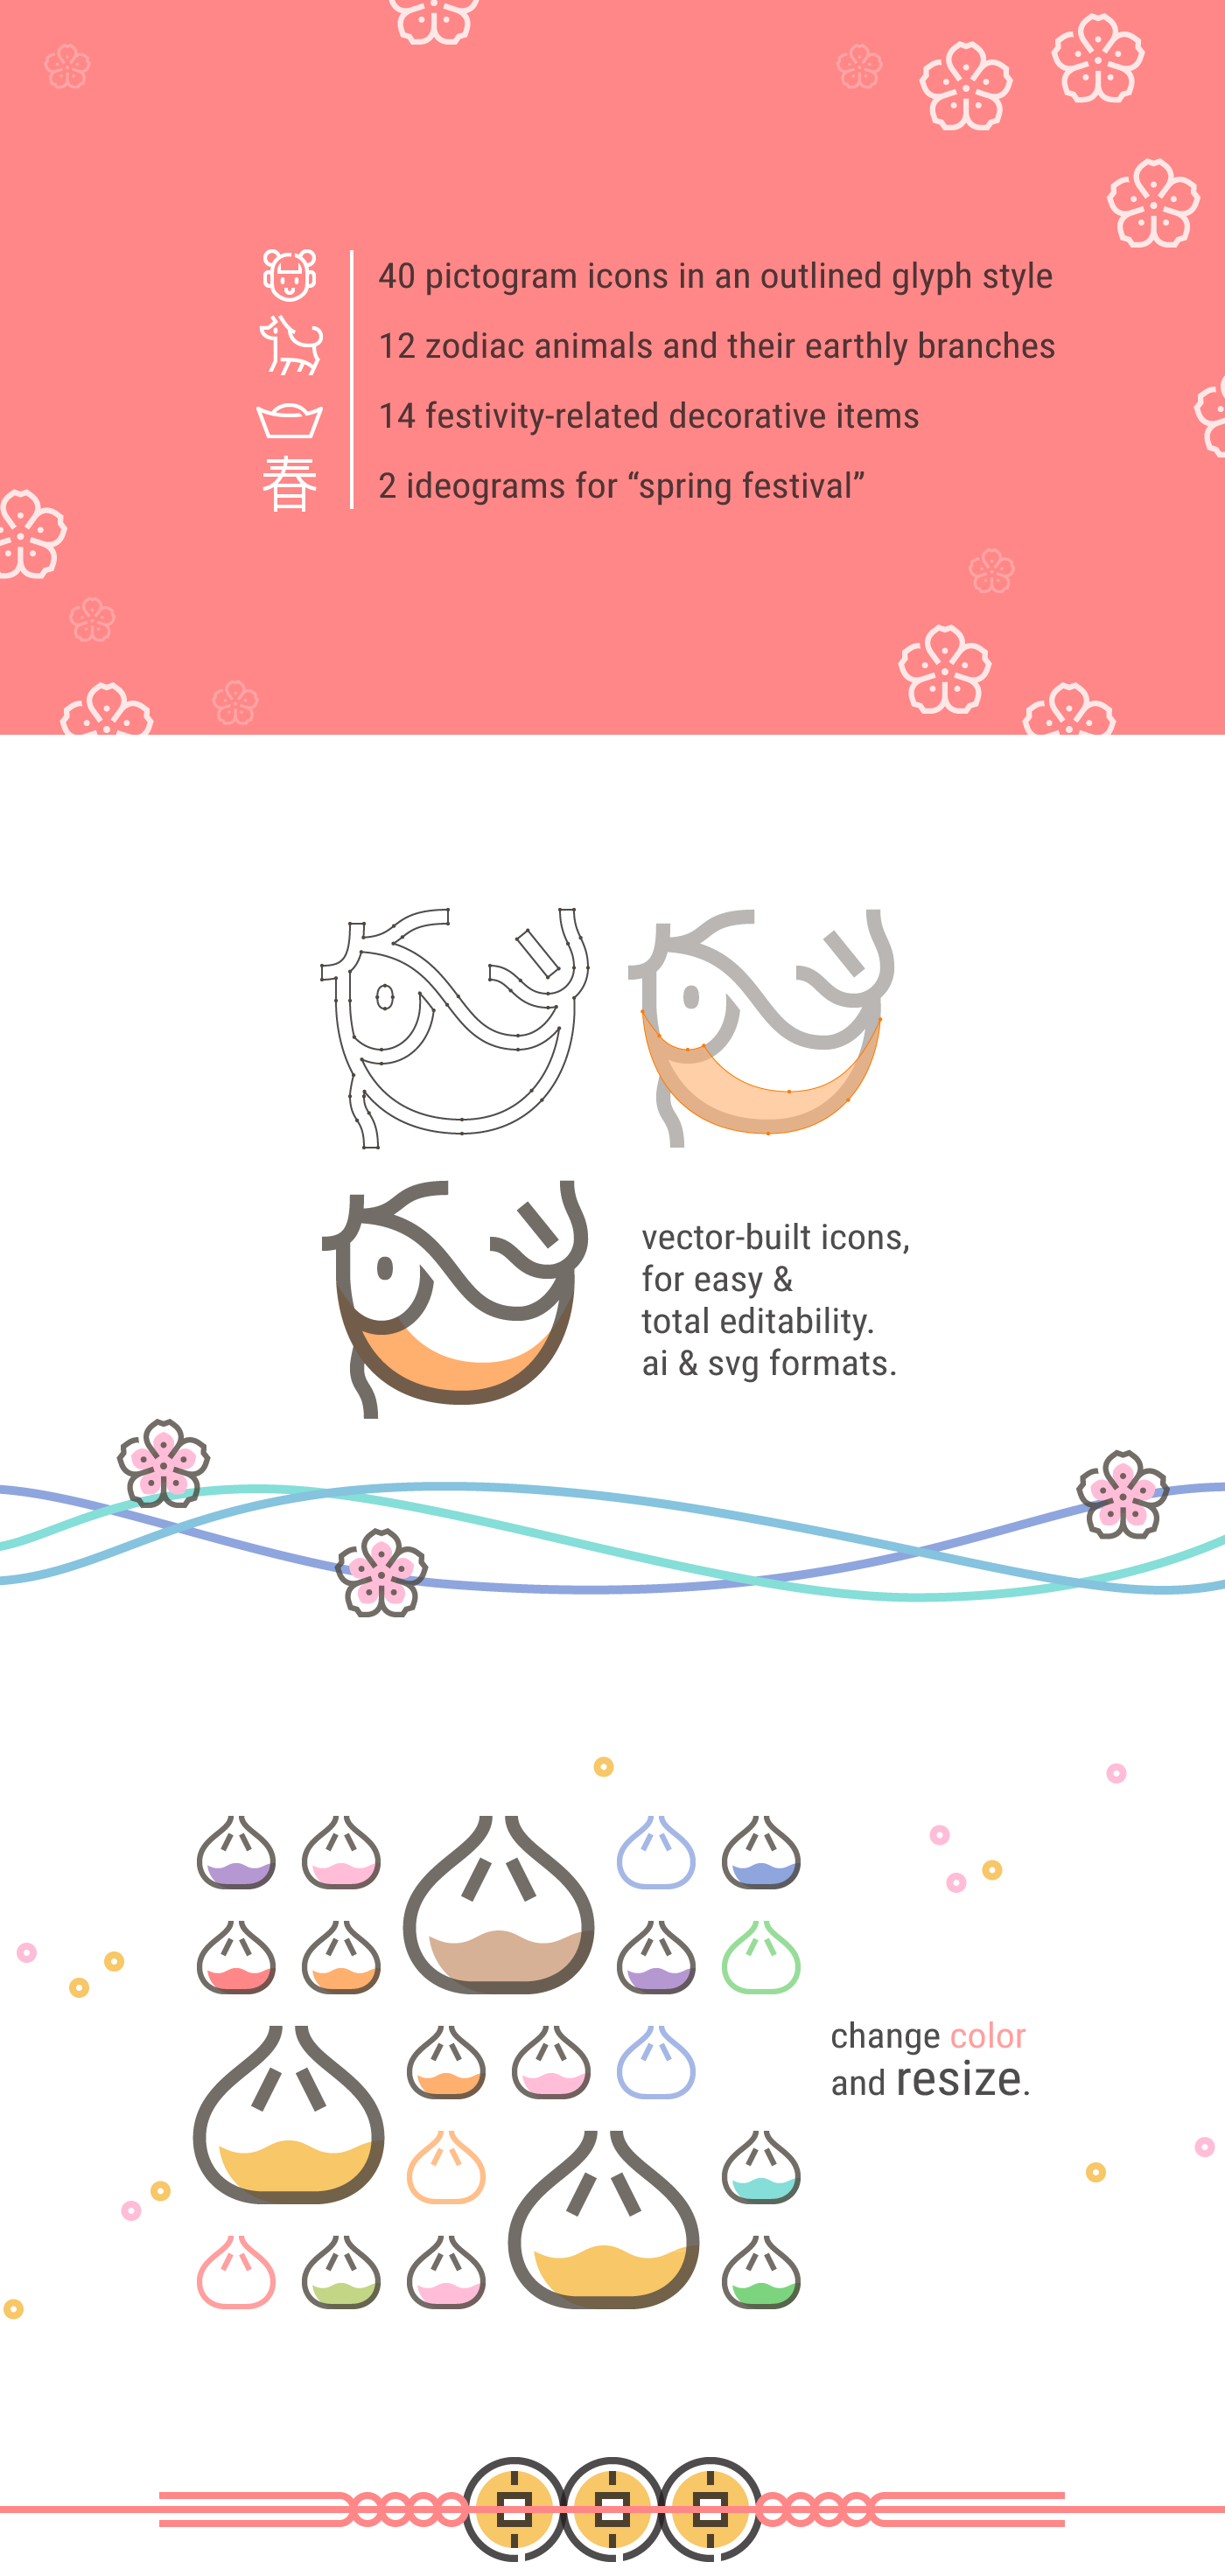 chinese new year chinese zodiac animal icons 春节 新年 生肖 图标 zodiac icons free vector